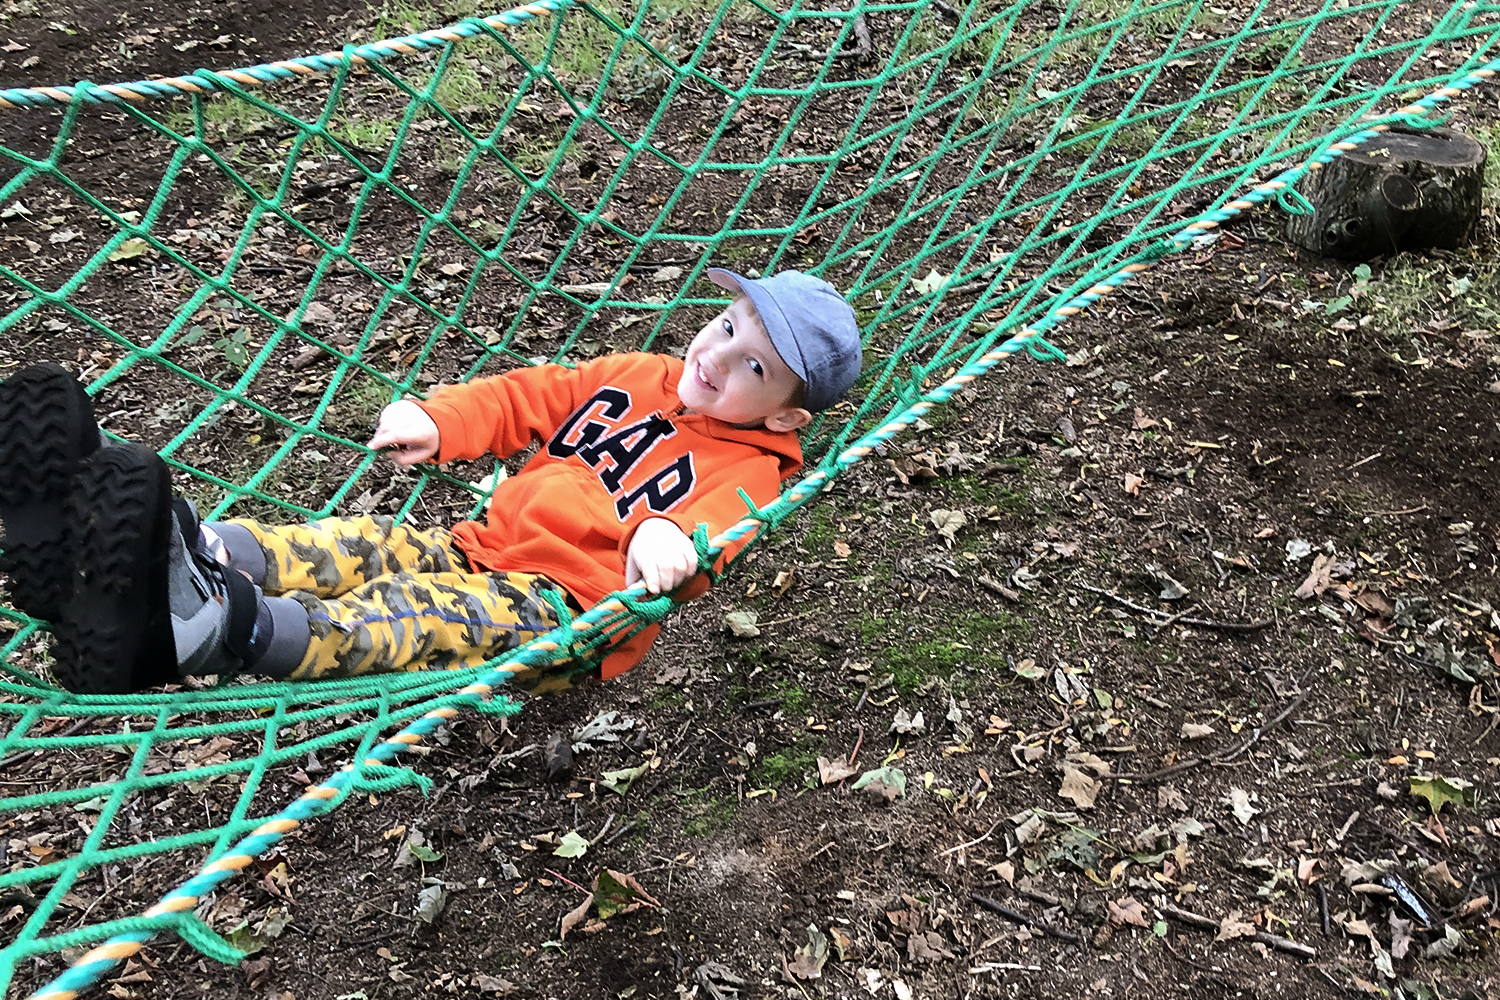 Gabe swinging in a hammock in the woods